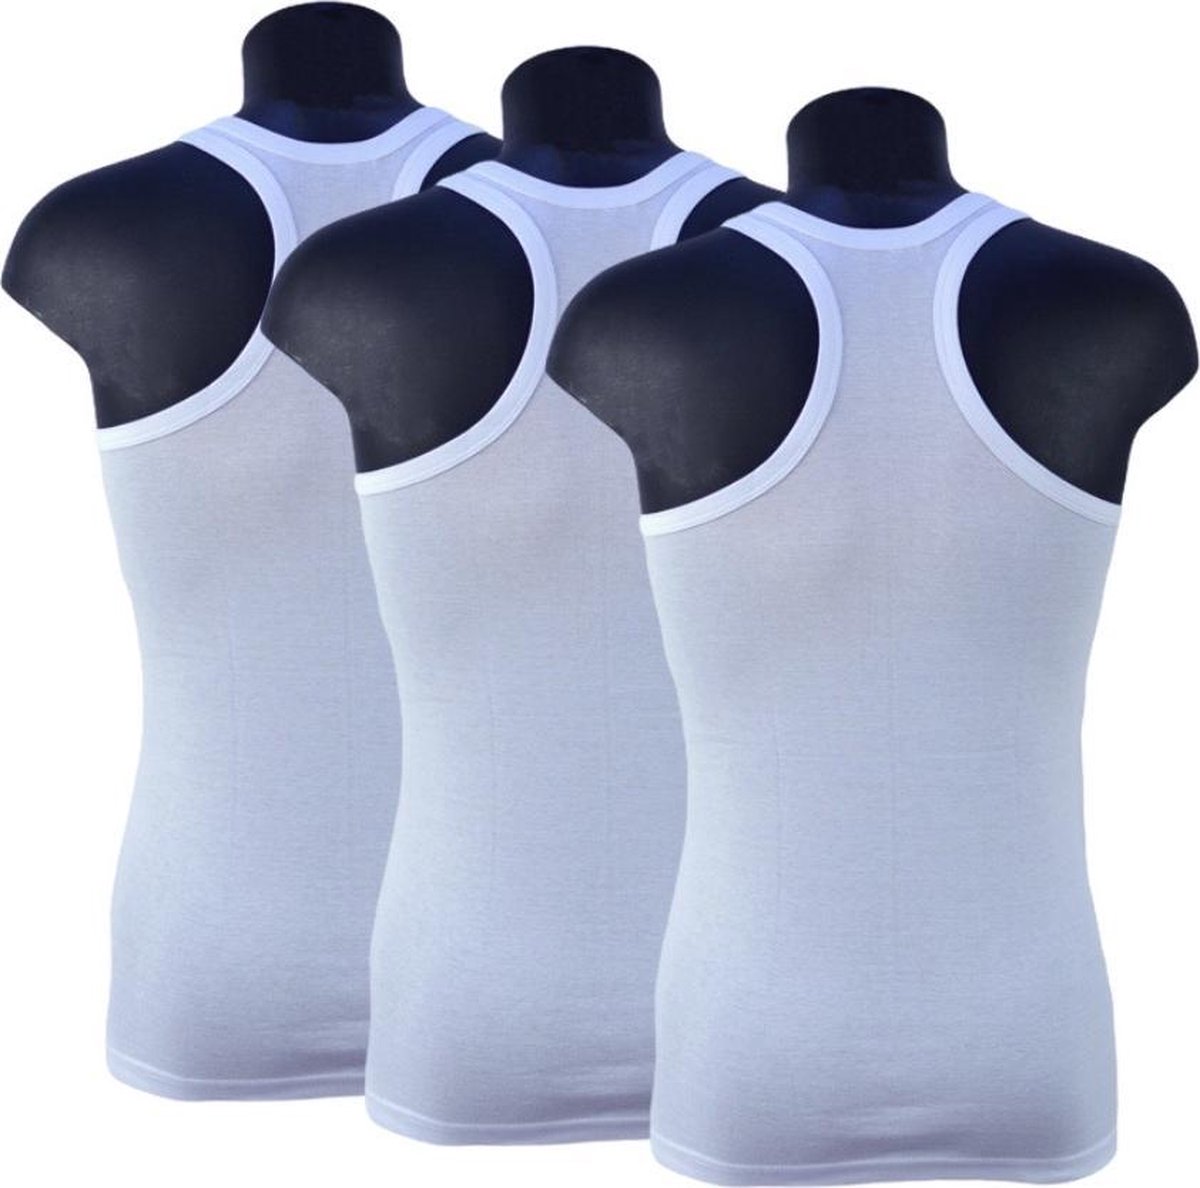 3 Pack Top kwaliteit halterhemd - 100% katoen - Wit - Maat XL